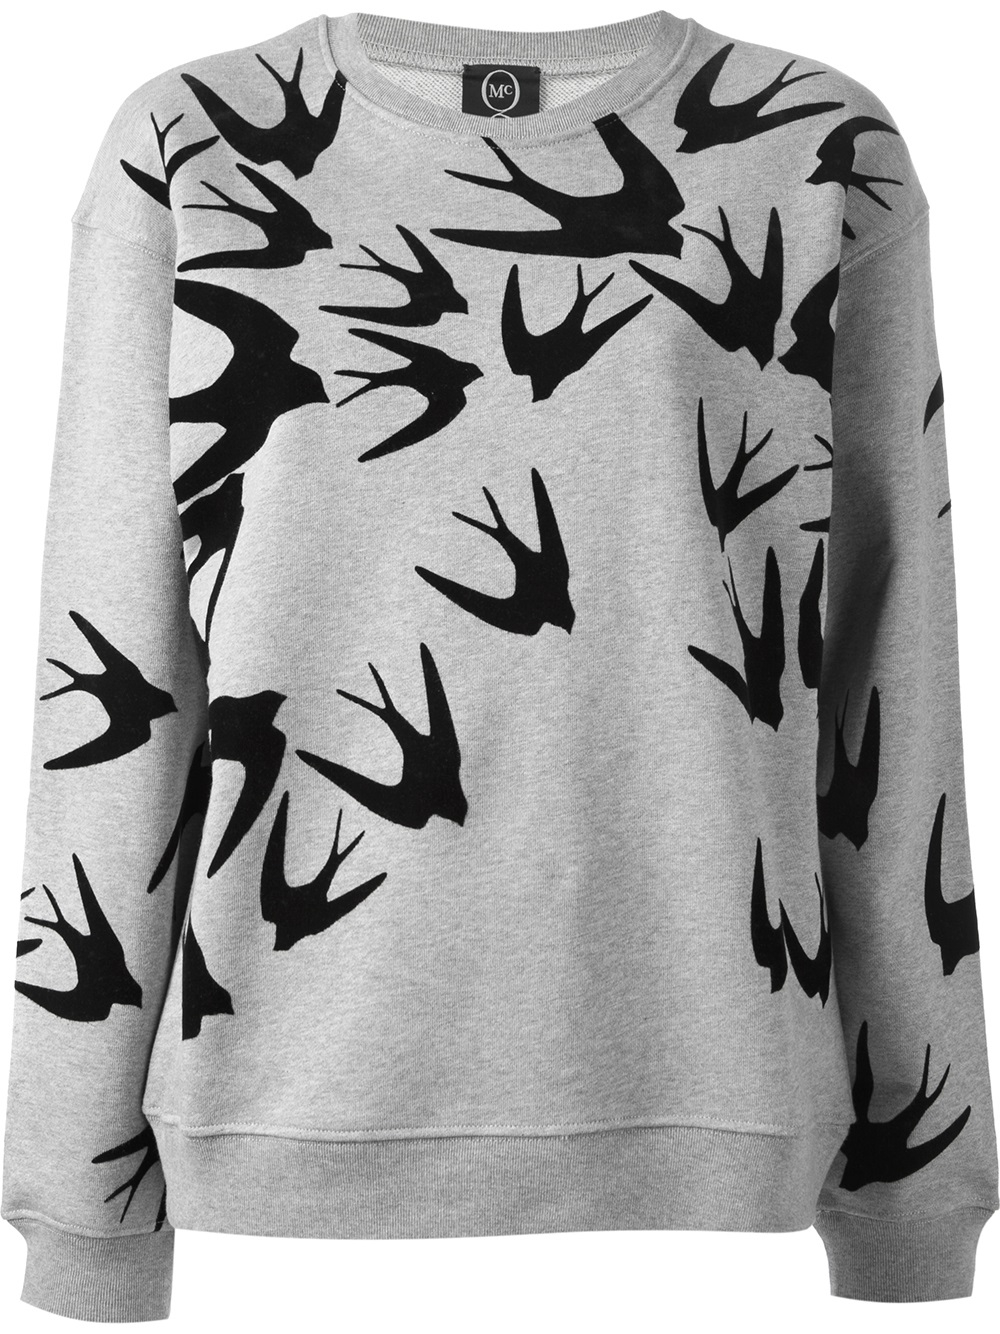 McQ Bird Print Sweater in Gray | Lyst